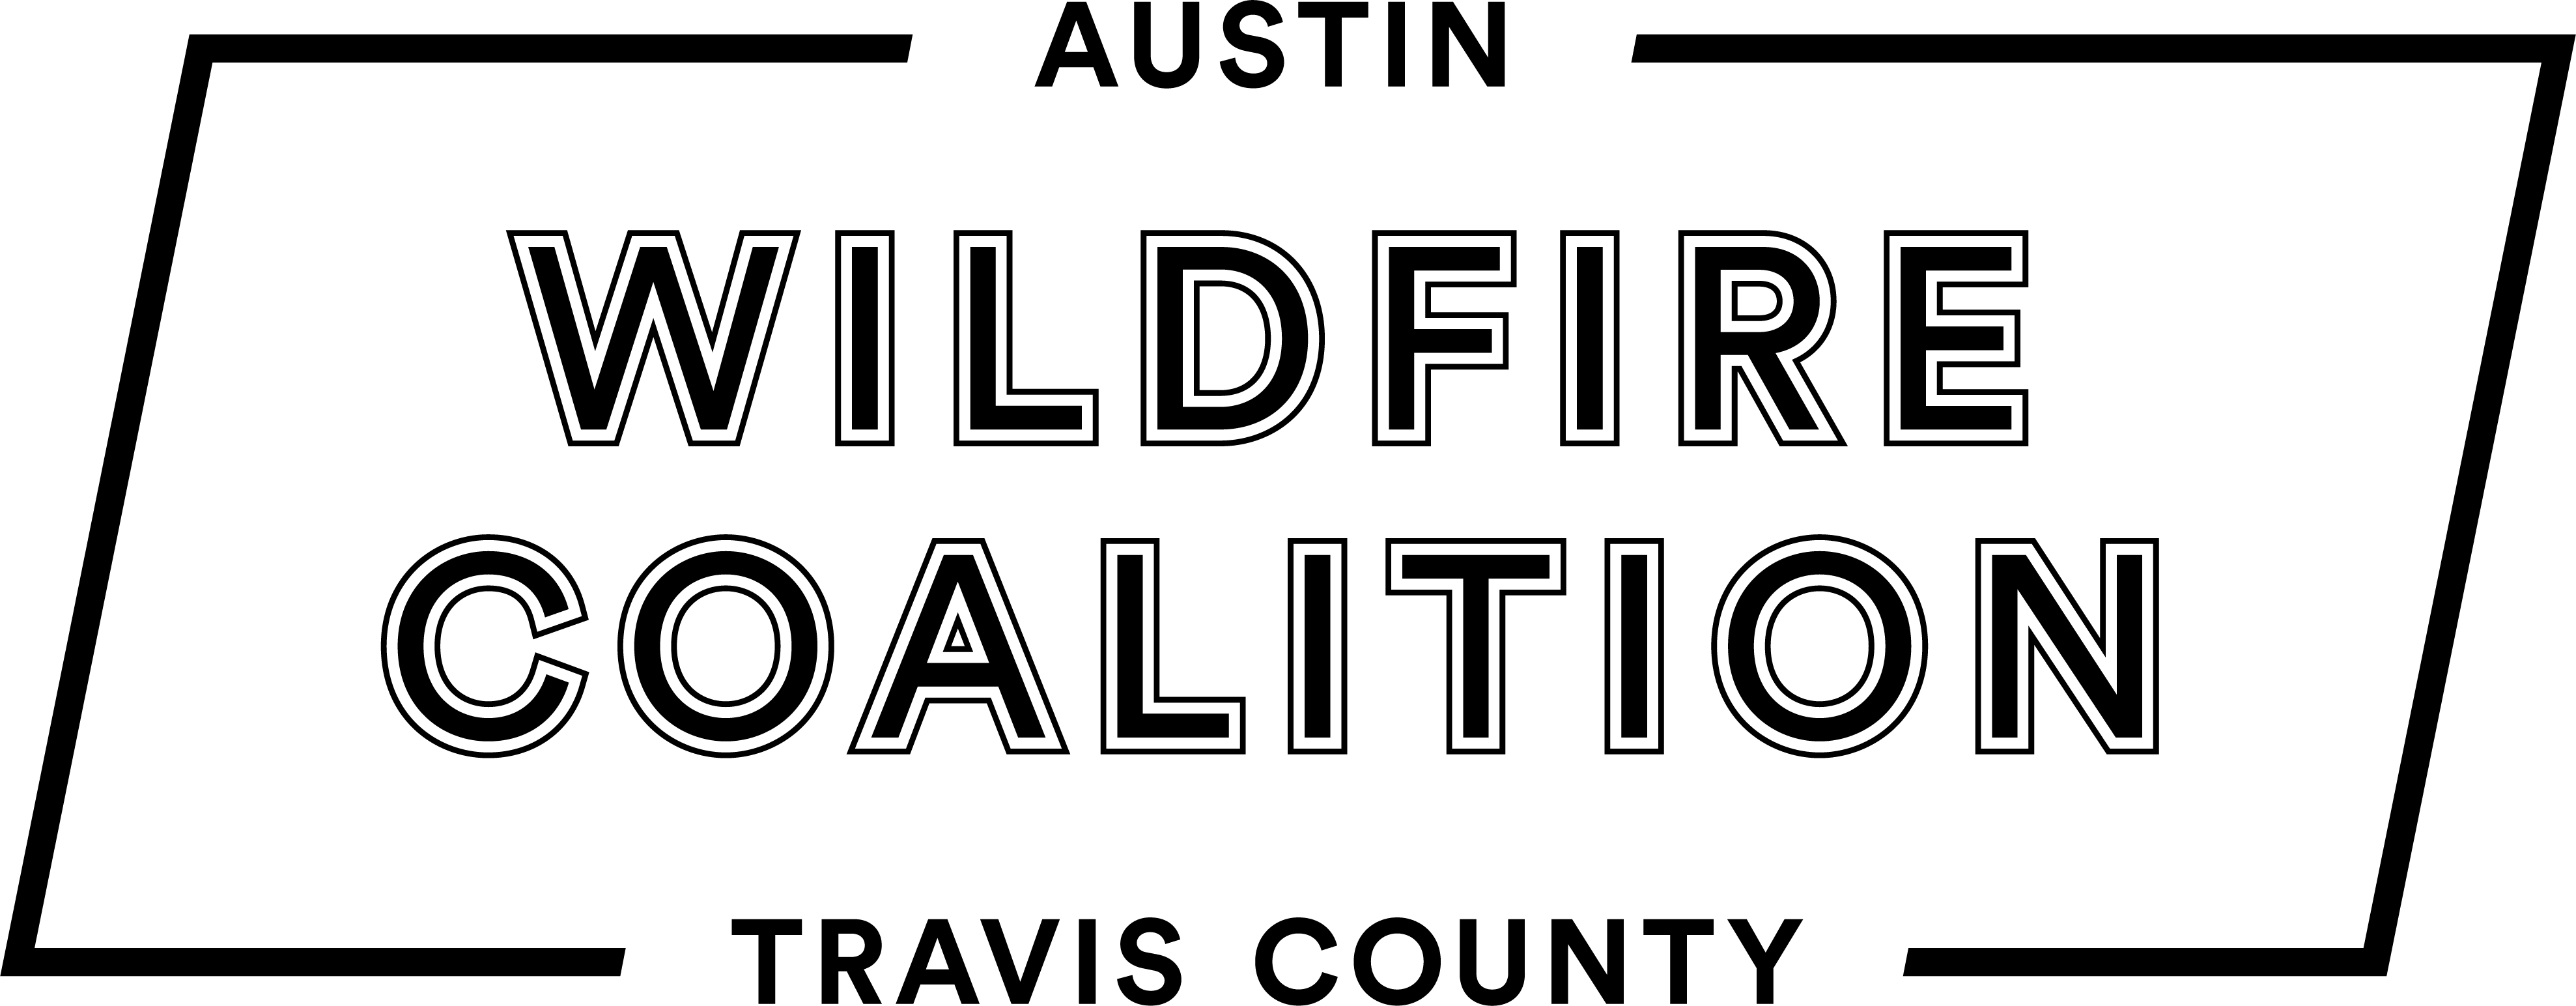 travis county wildfire coalition logo black